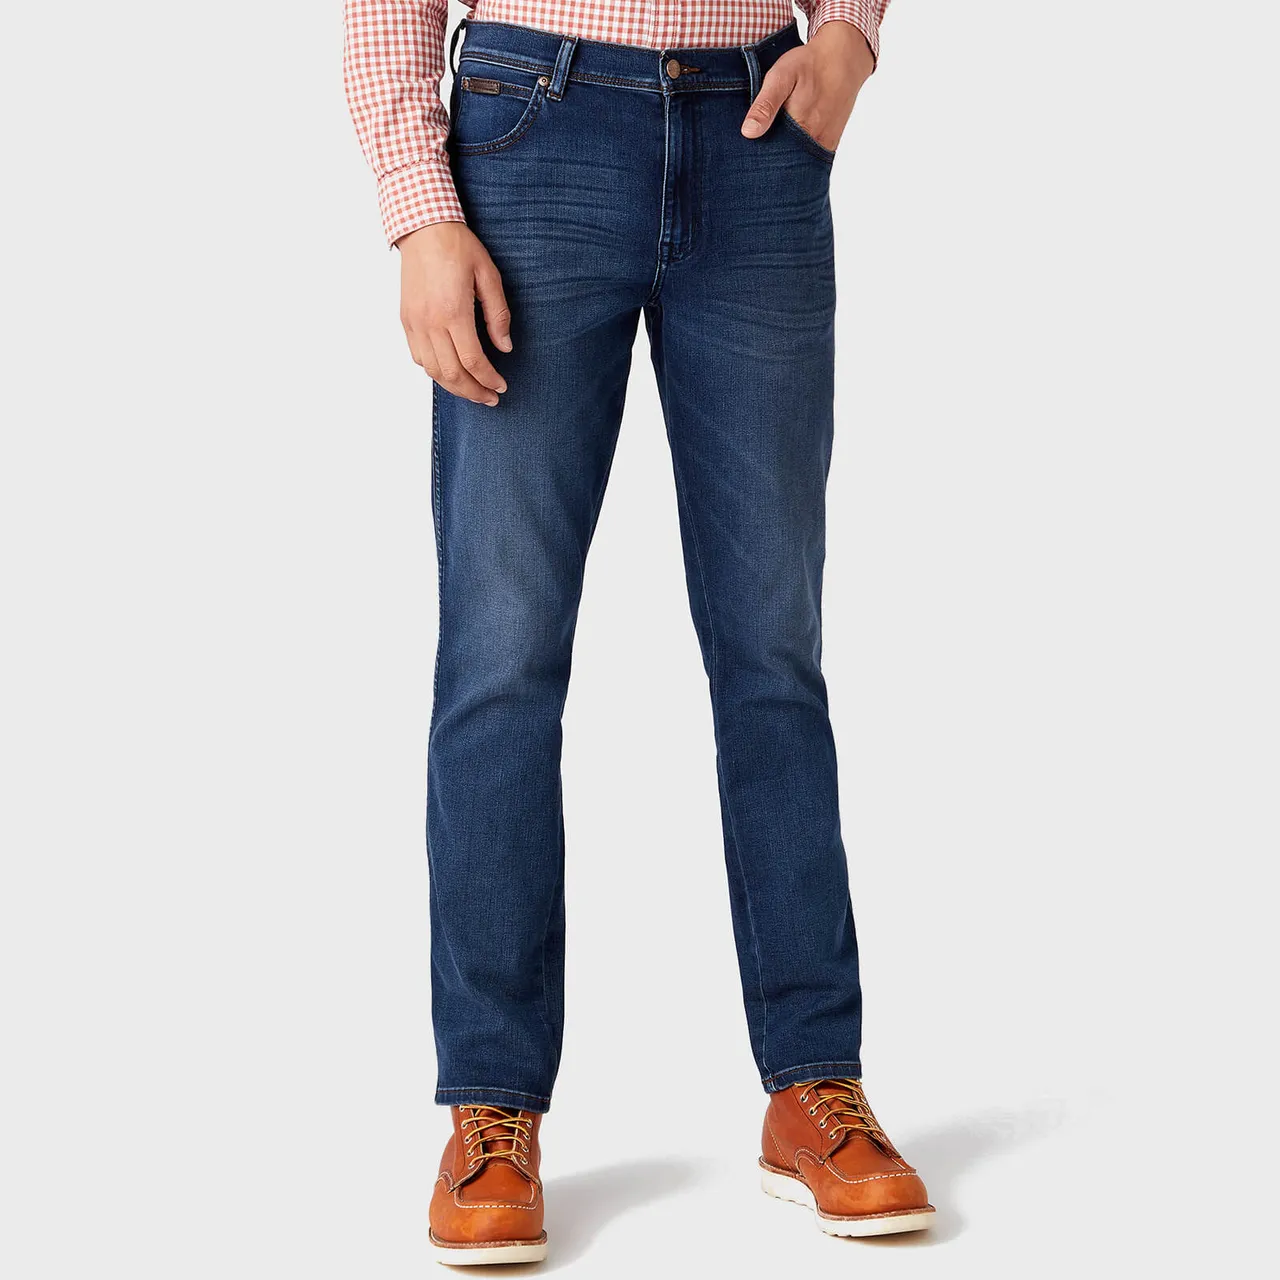 Wrangler Texas Slim Fit Cotton-Blend Jeans